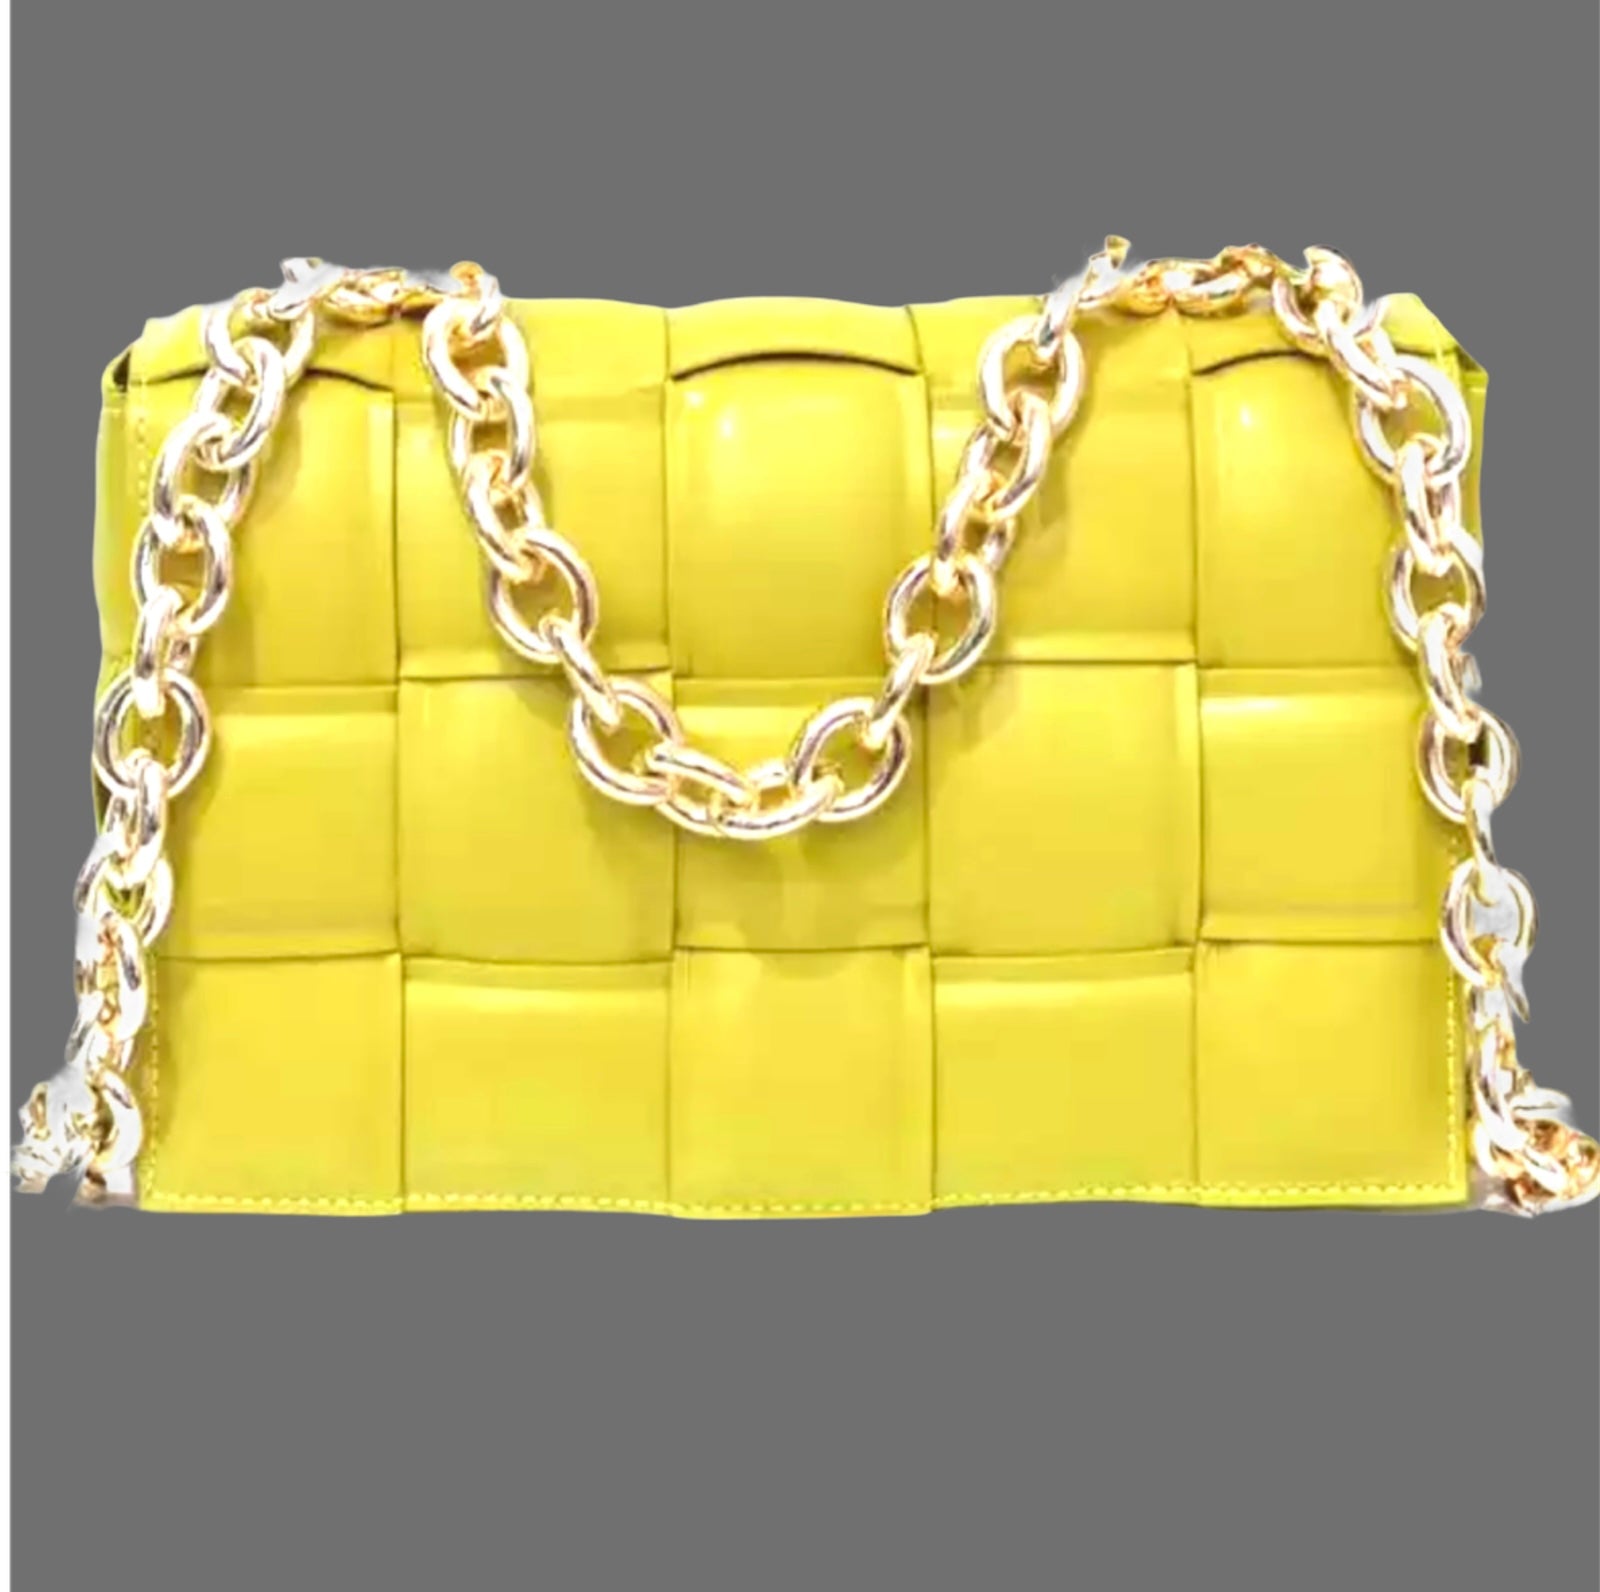 BXU LV 044 Small Sling Bag Gold Chain – Onlykikaybox